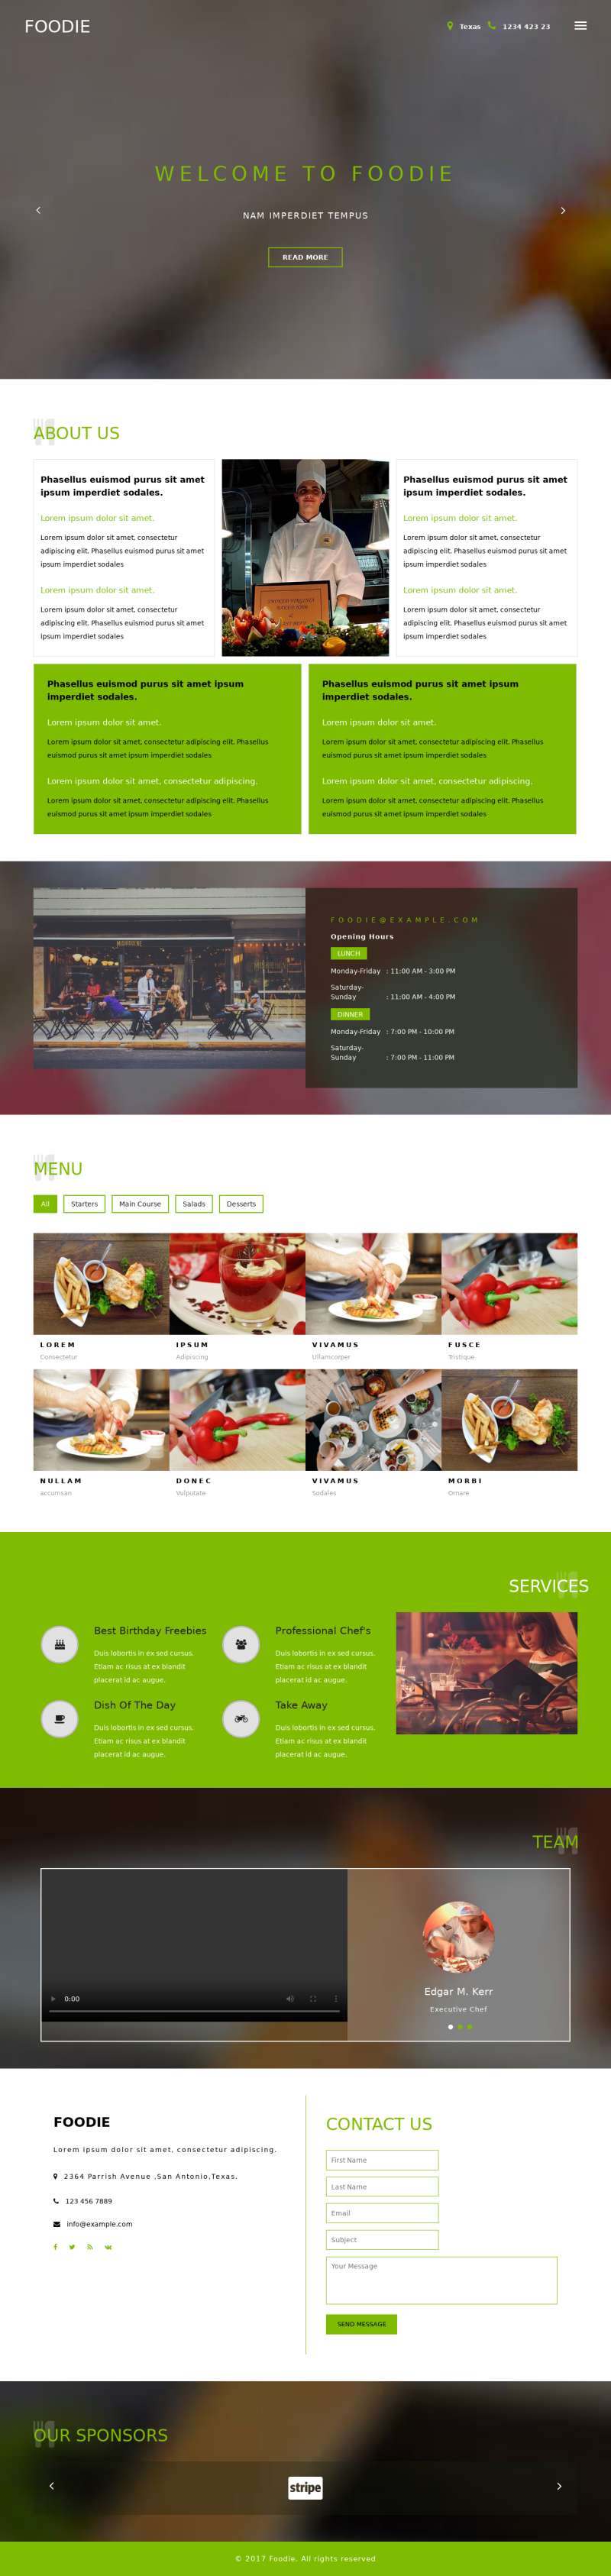 Bootstrap响应式美食餐厅网站前端模板